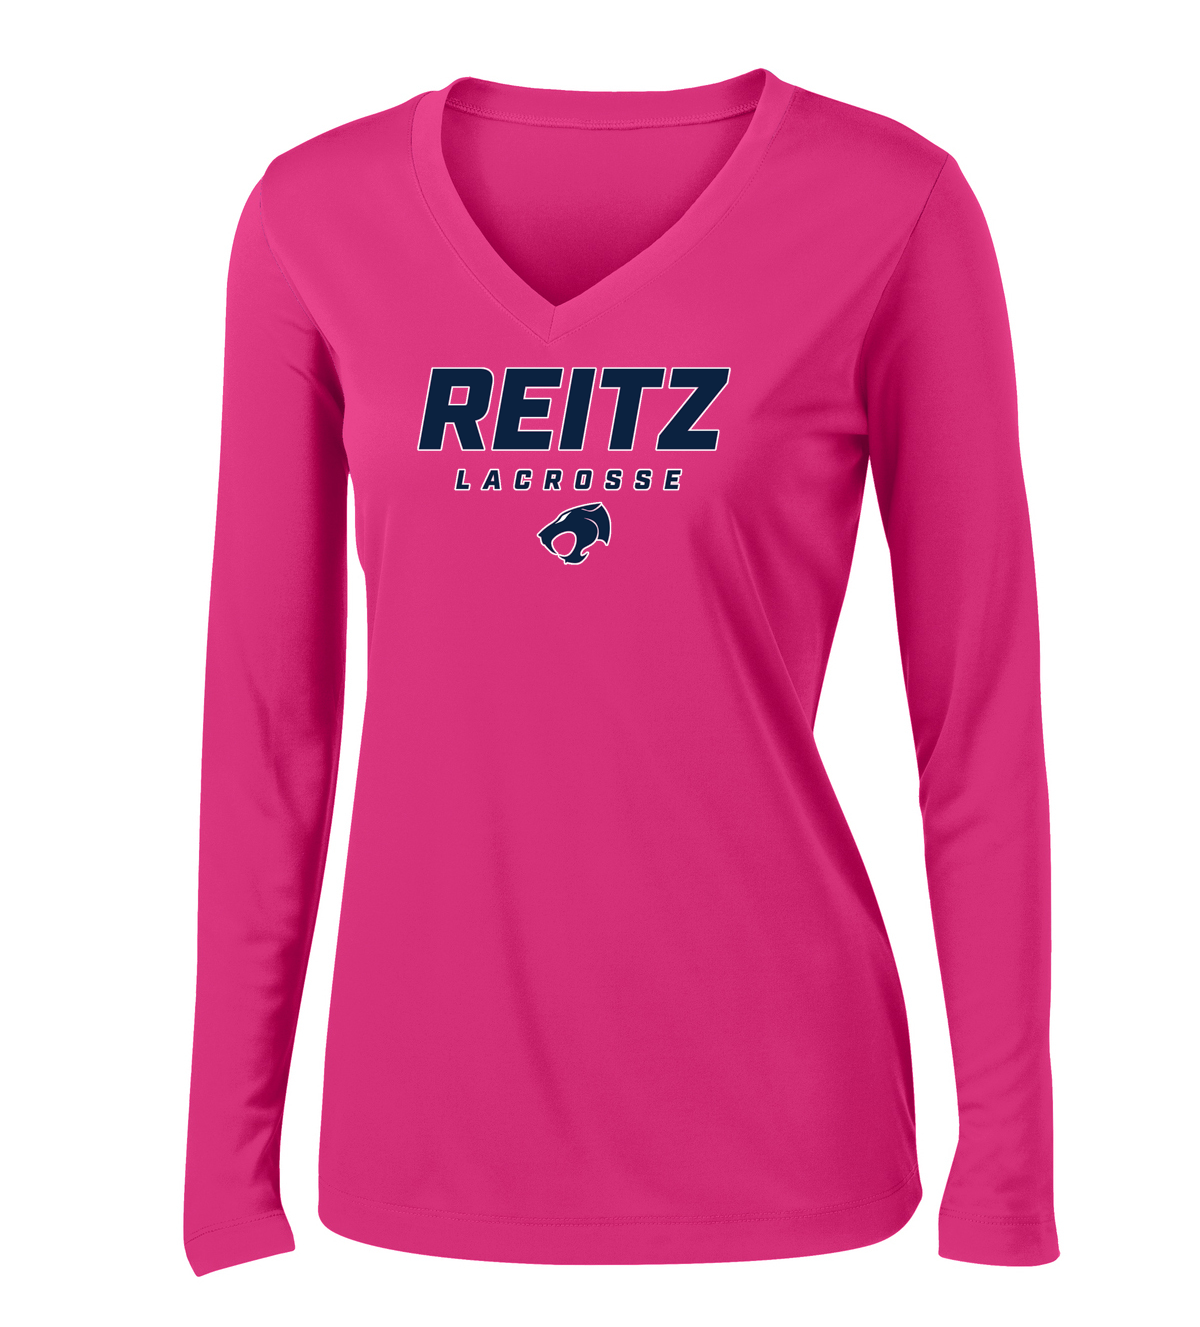 Reitz Lacrosse Women's Pink Long Sleeve Performance Shirt